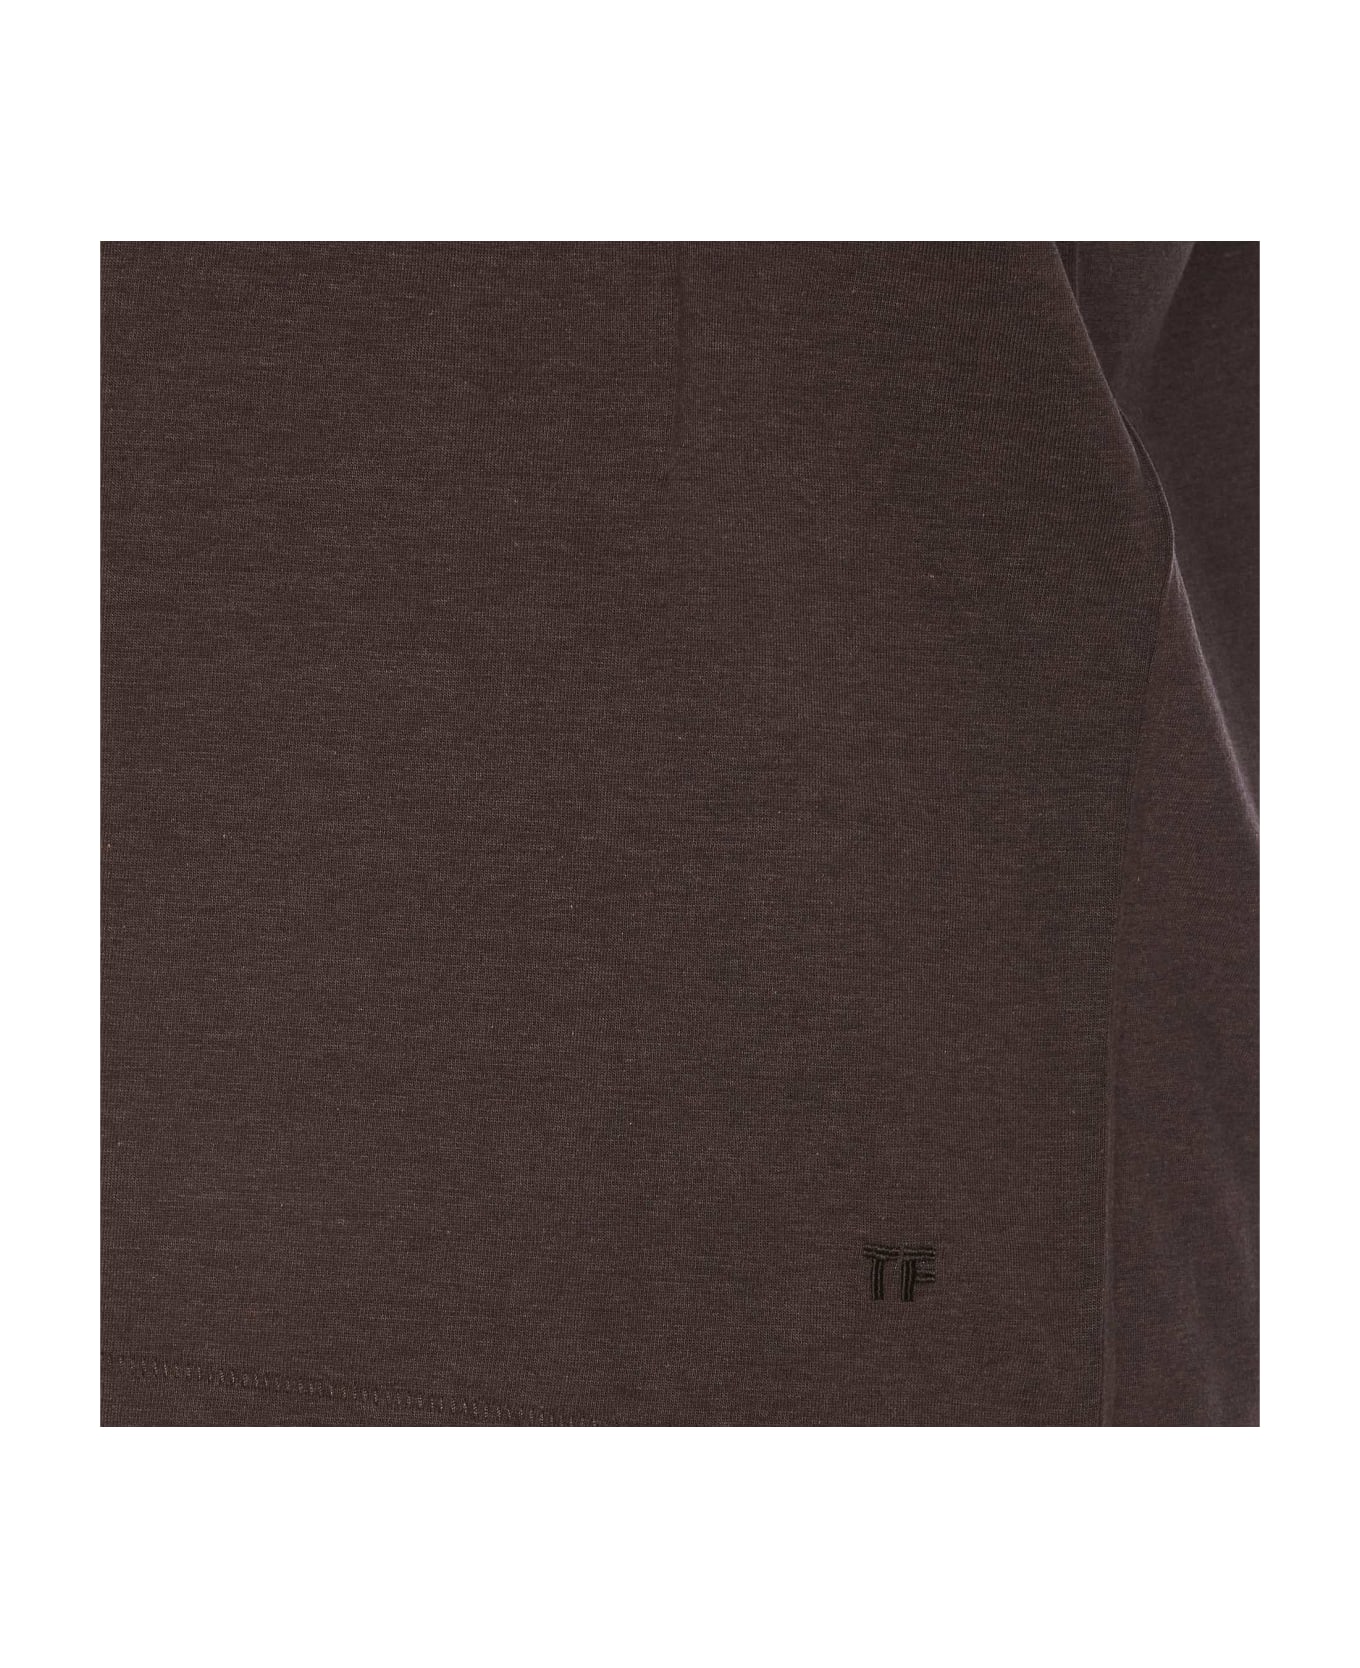 Tom Ford T-shirt - Brown